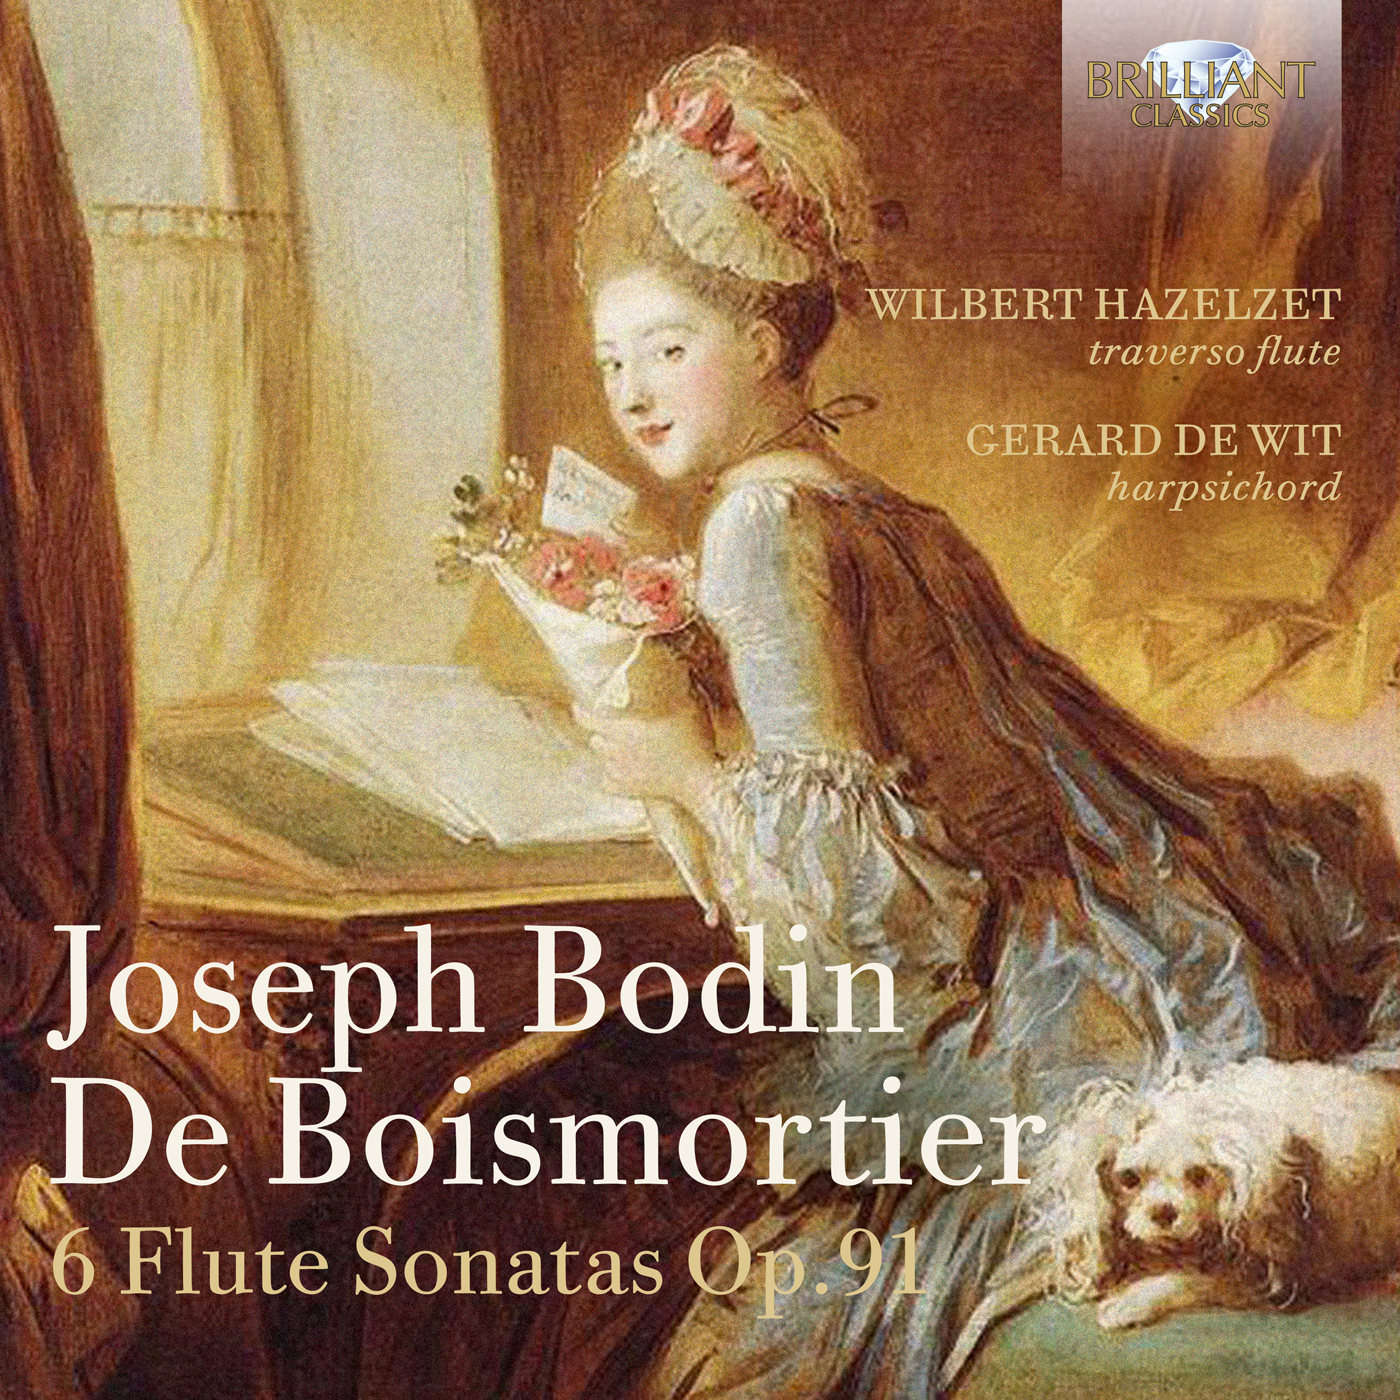 Joseph Bodin de Boismortier: 6 Flute Sonatas Op. 91